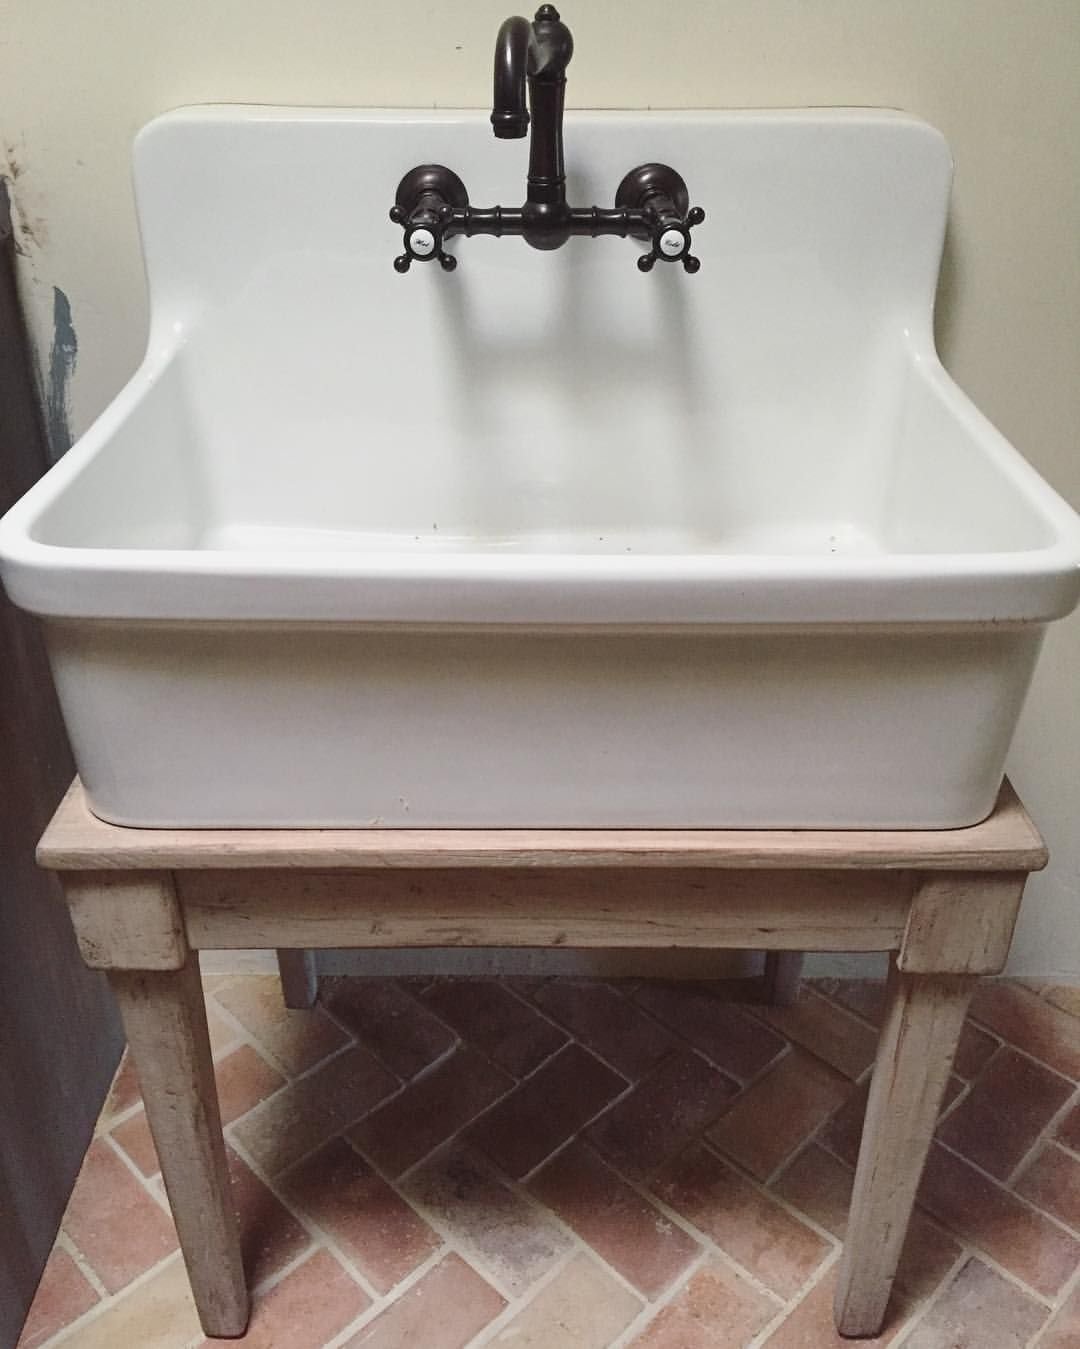 Раковина хозяйственная. Раковина для прачечной. Раковина для стирки белья. Поддон для стирки белья в ванной комнате. Vintage Bathroom Sink.